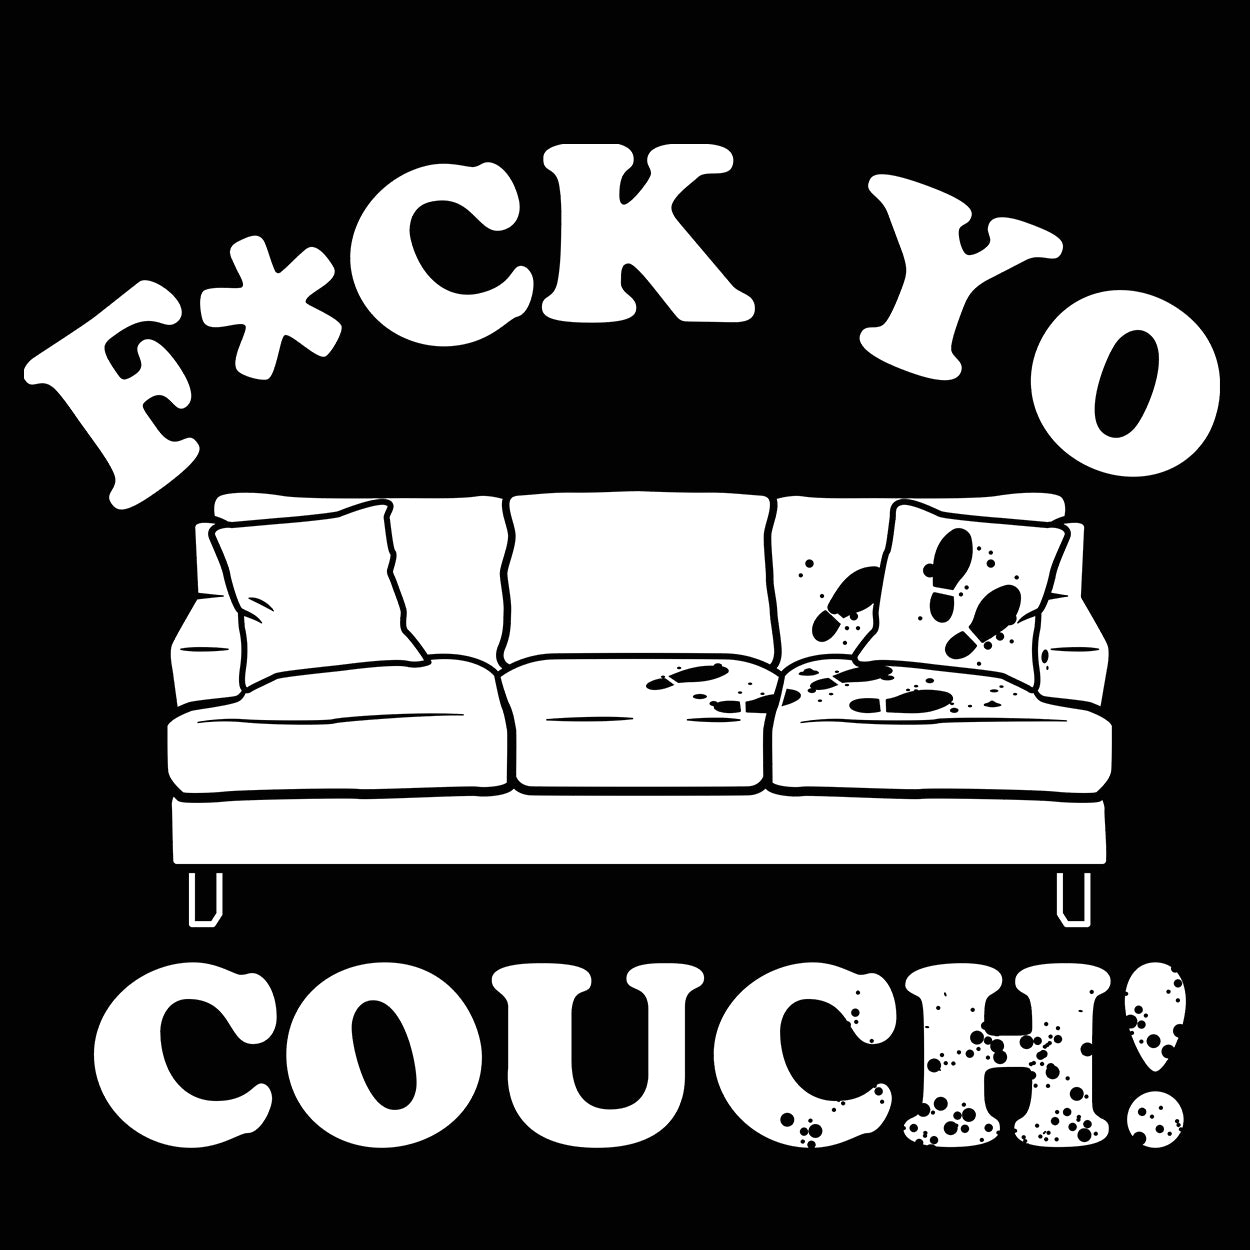 F*ck Yo Couch Tshirt - Donkey Tees